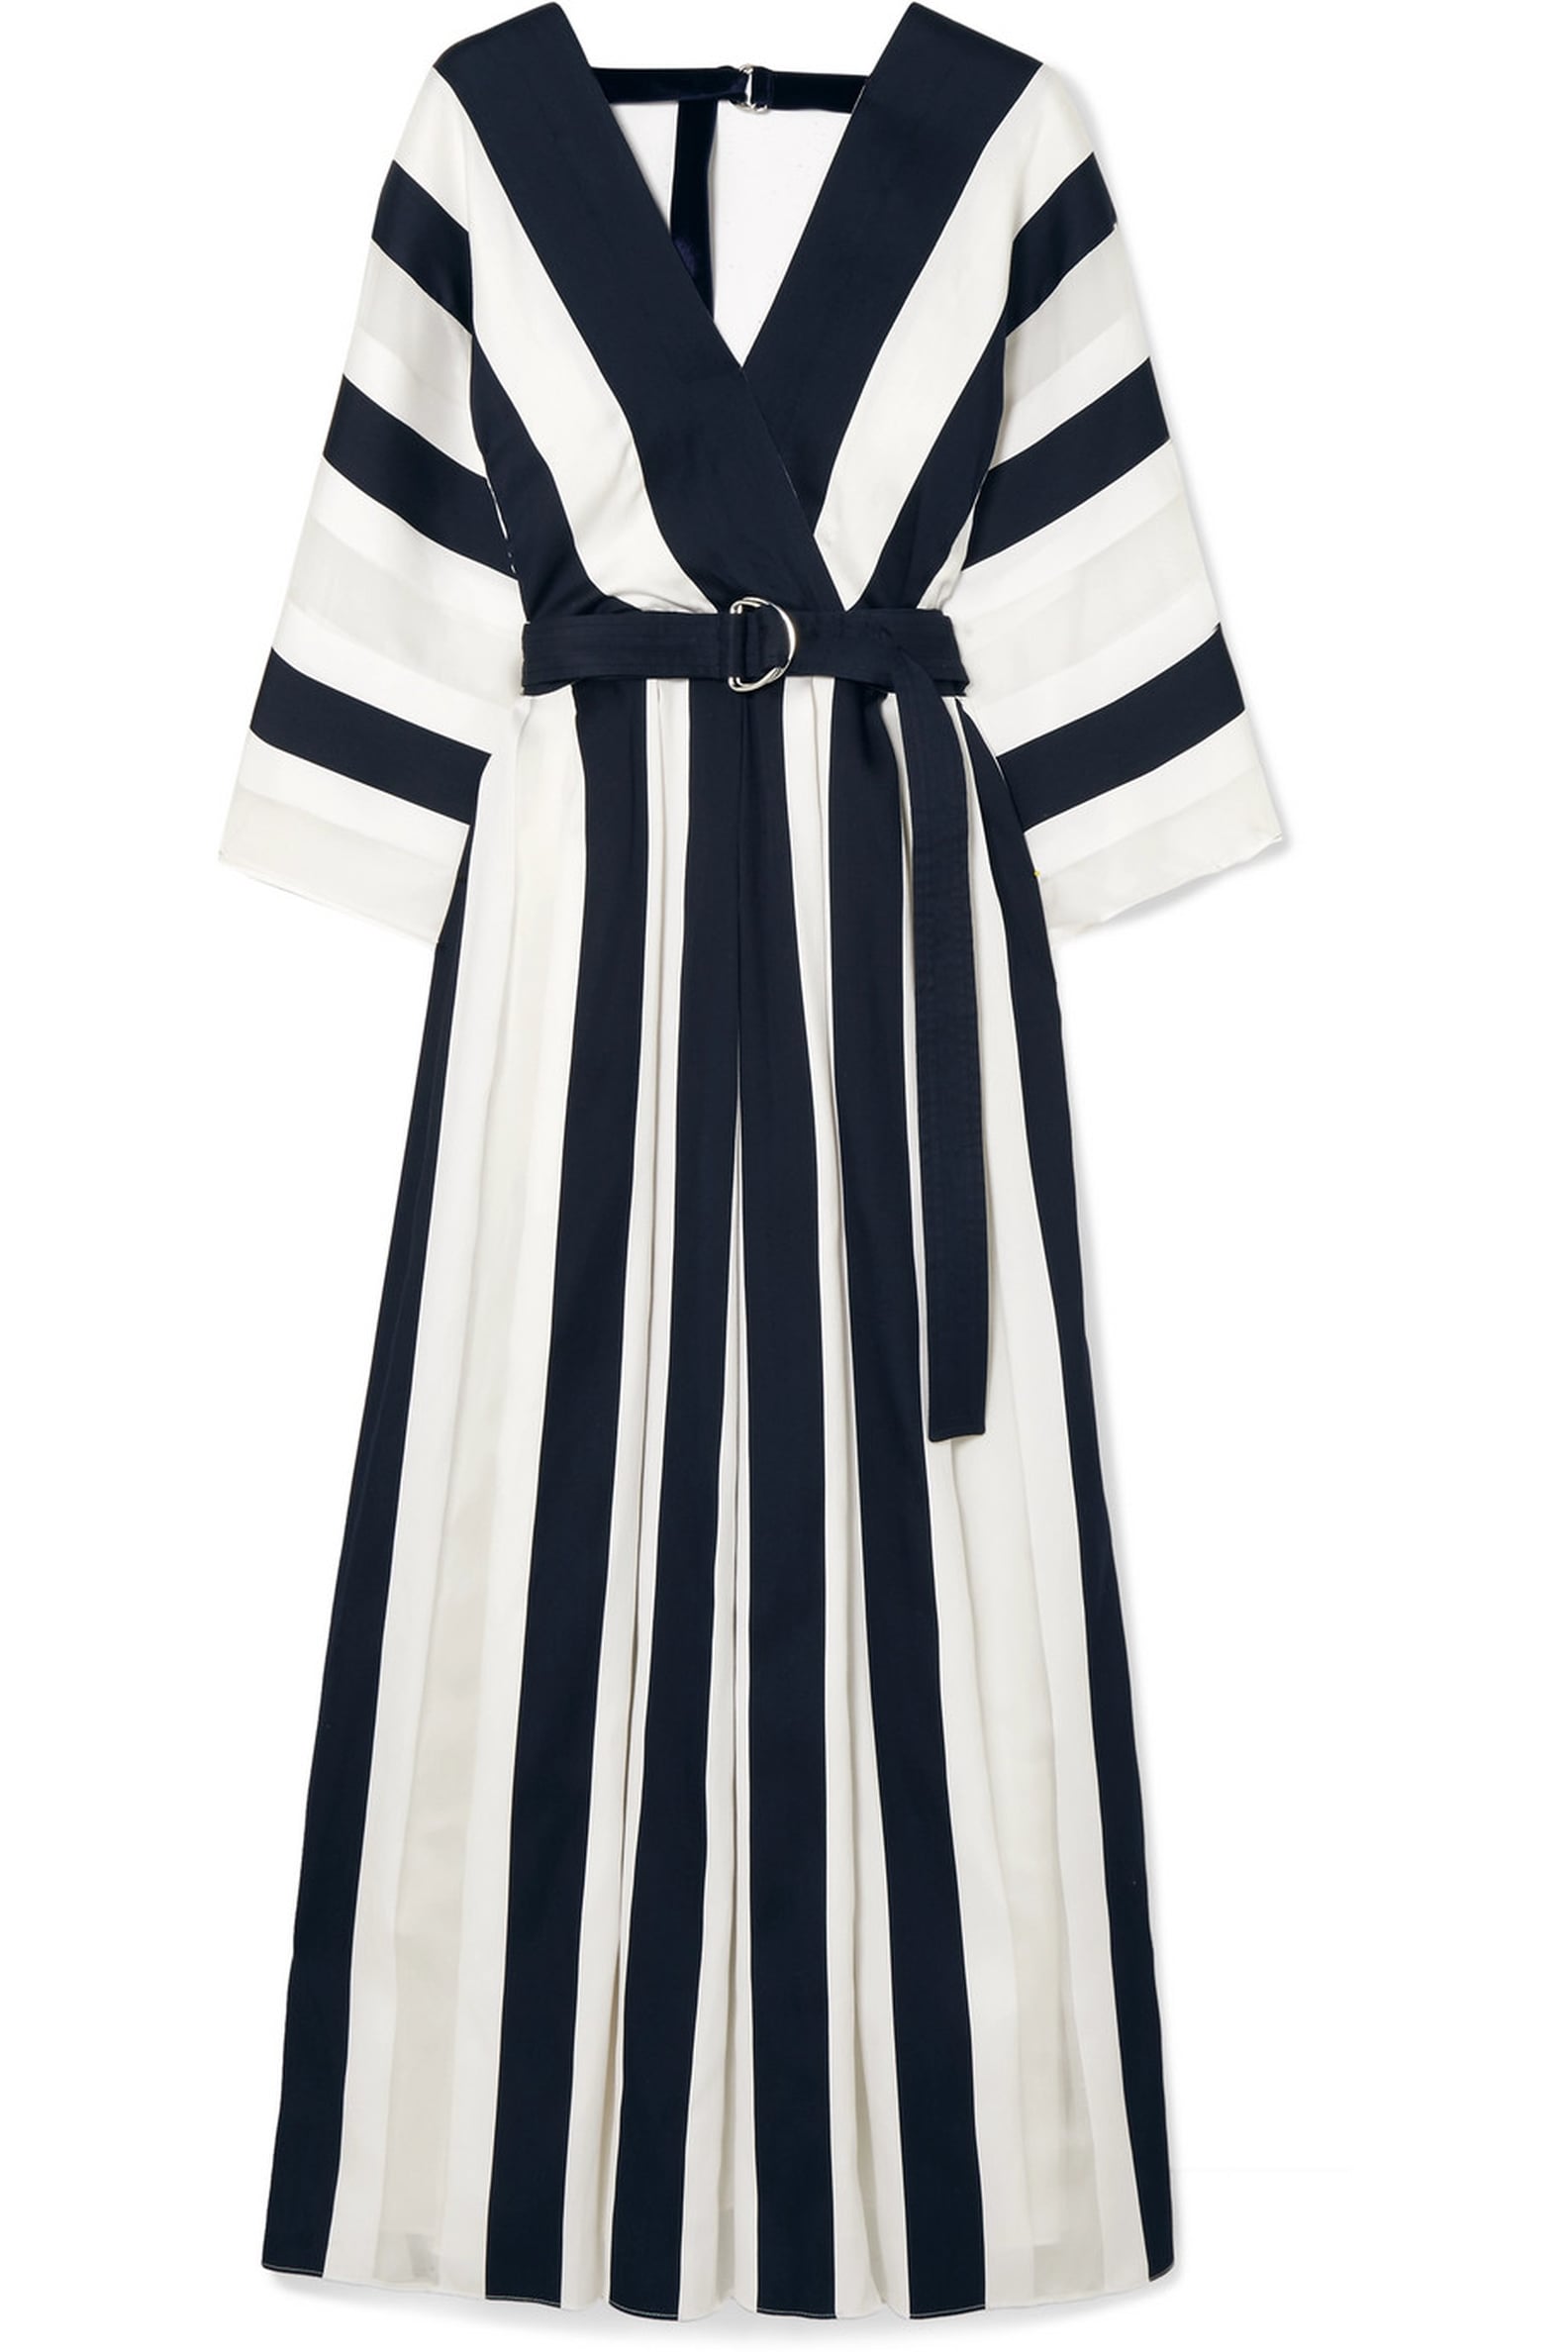 Gabrielle Union New York and Company Striped Dress | POPSUGAR Fashion